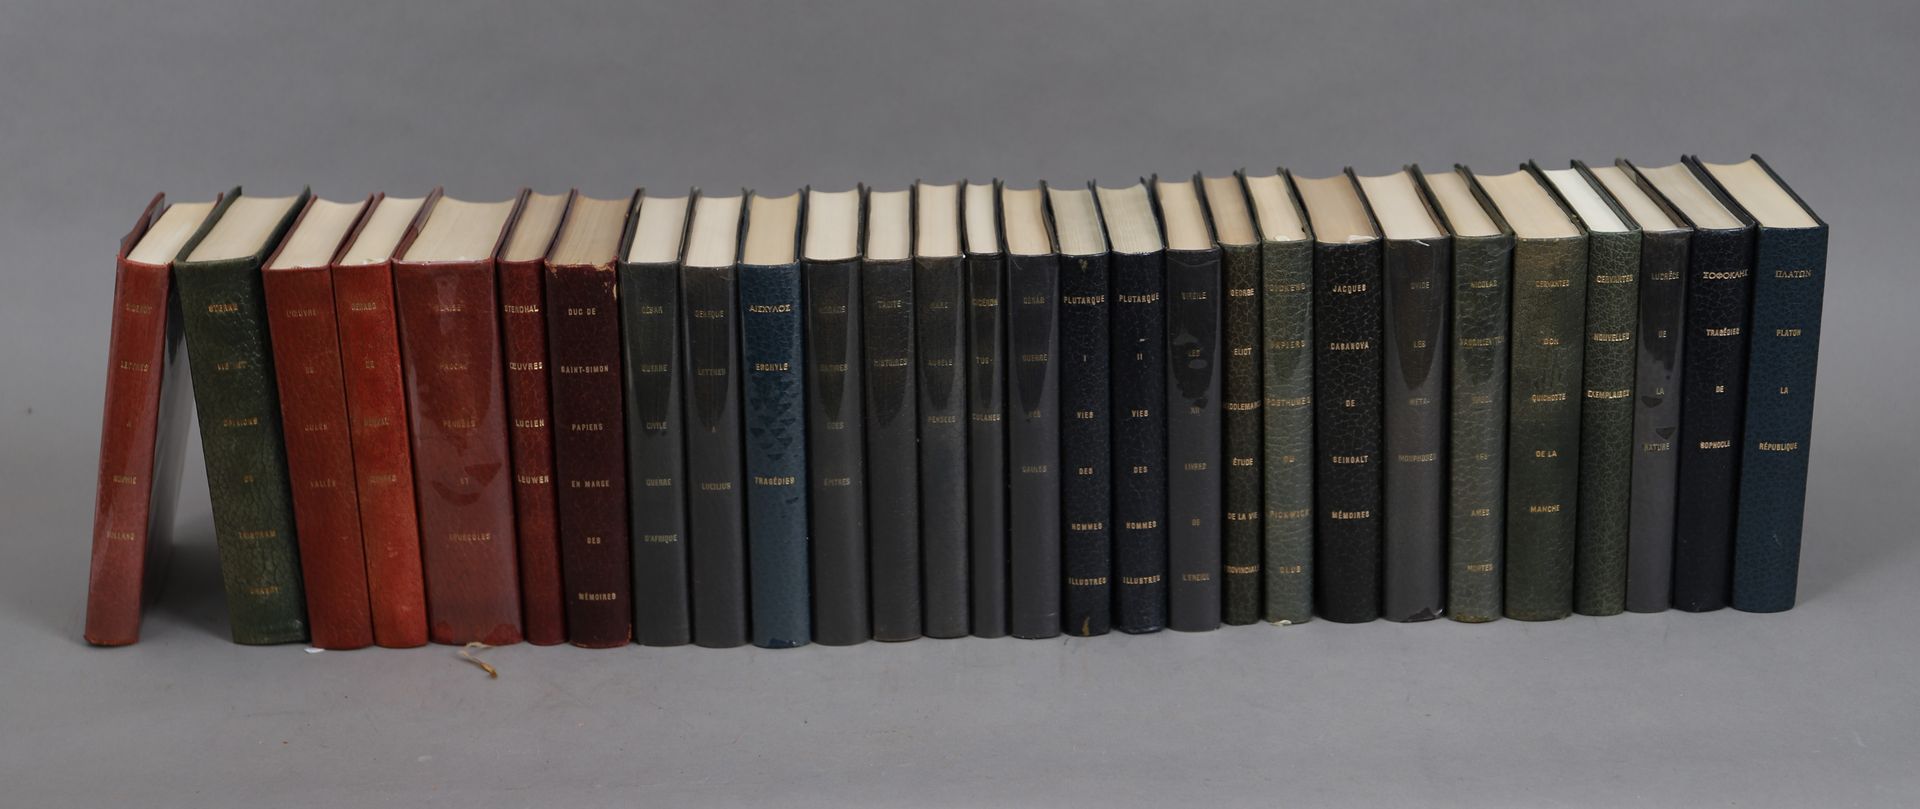 Null CLASSICS OF LITERATURE

LOT of 28 bound volumes. 

1965.